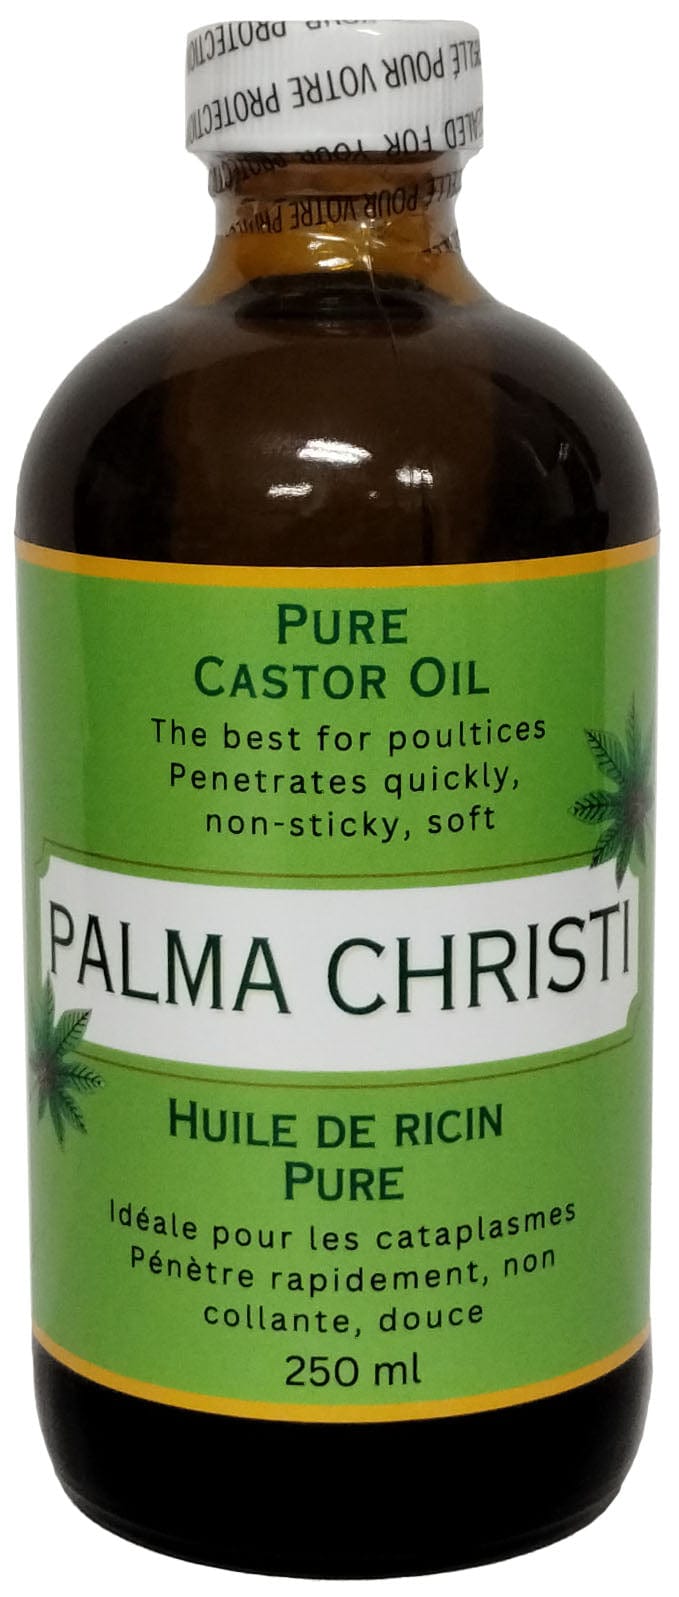 Palma christi (huile de ricin) 250ml